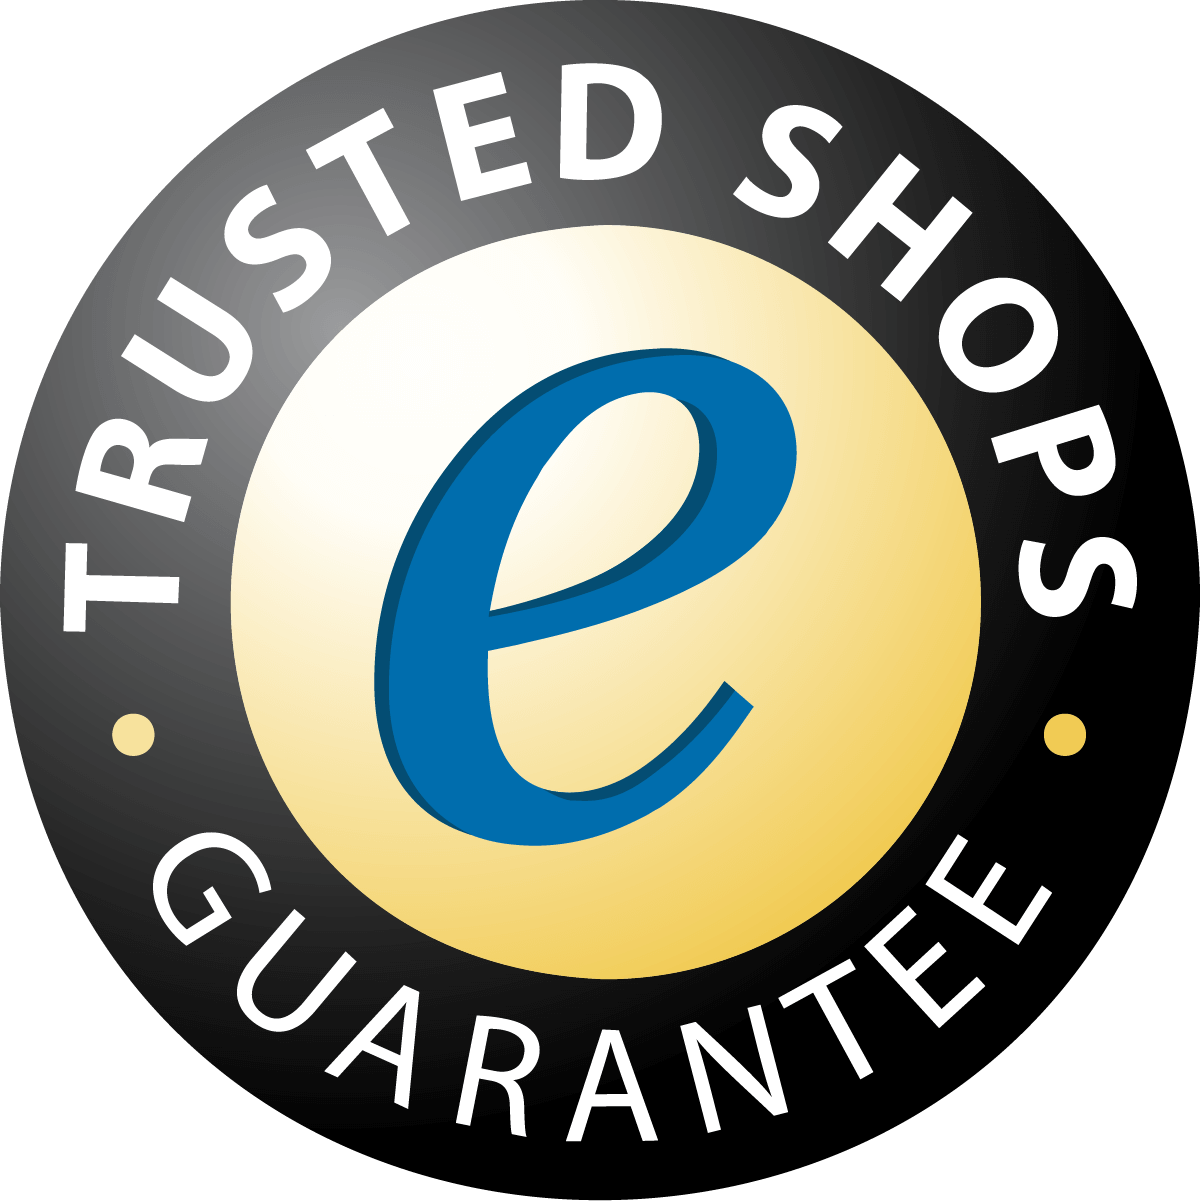 Trusted Shop Zertifiziert